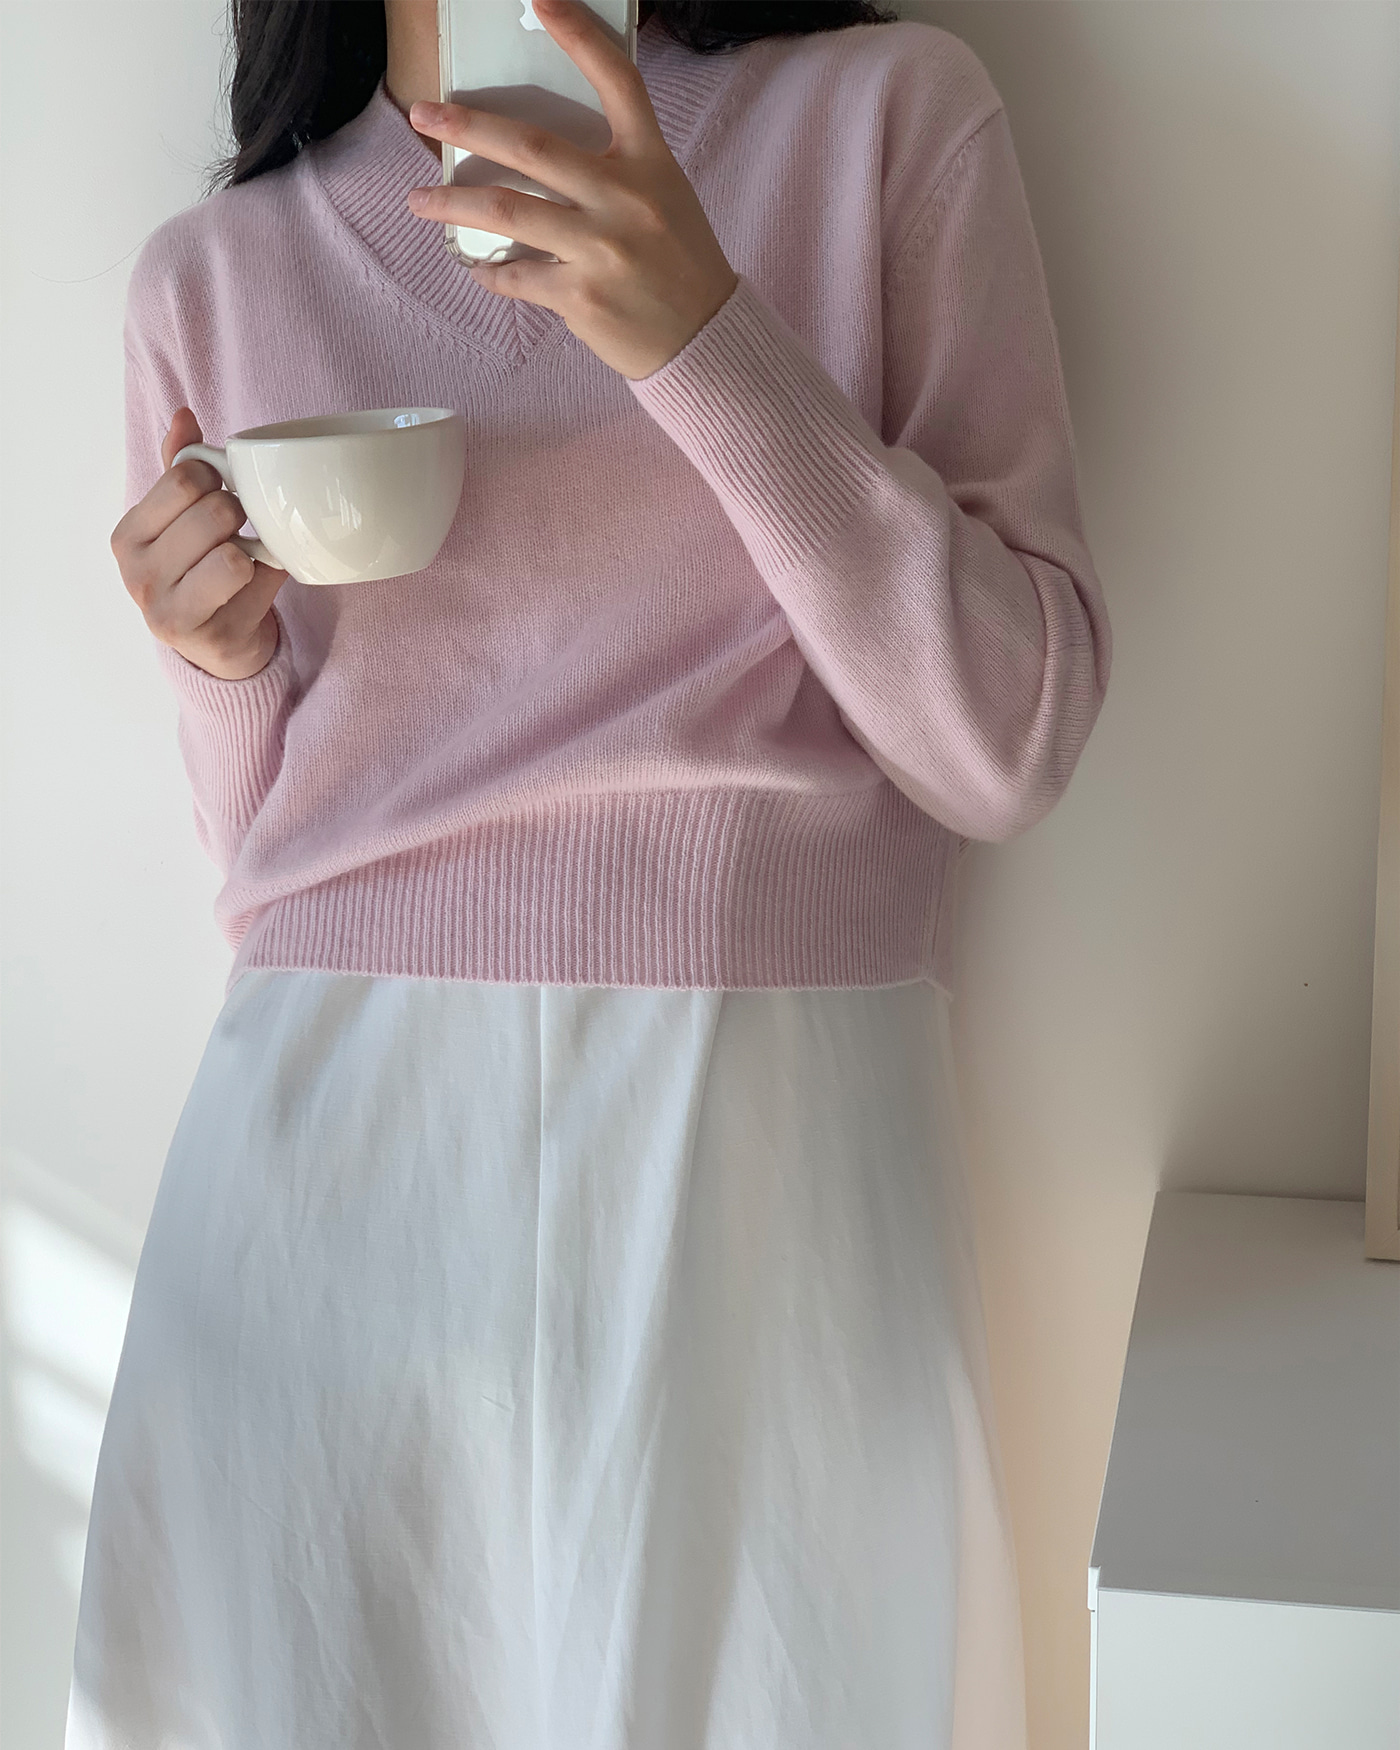 Butter v knit (pink)